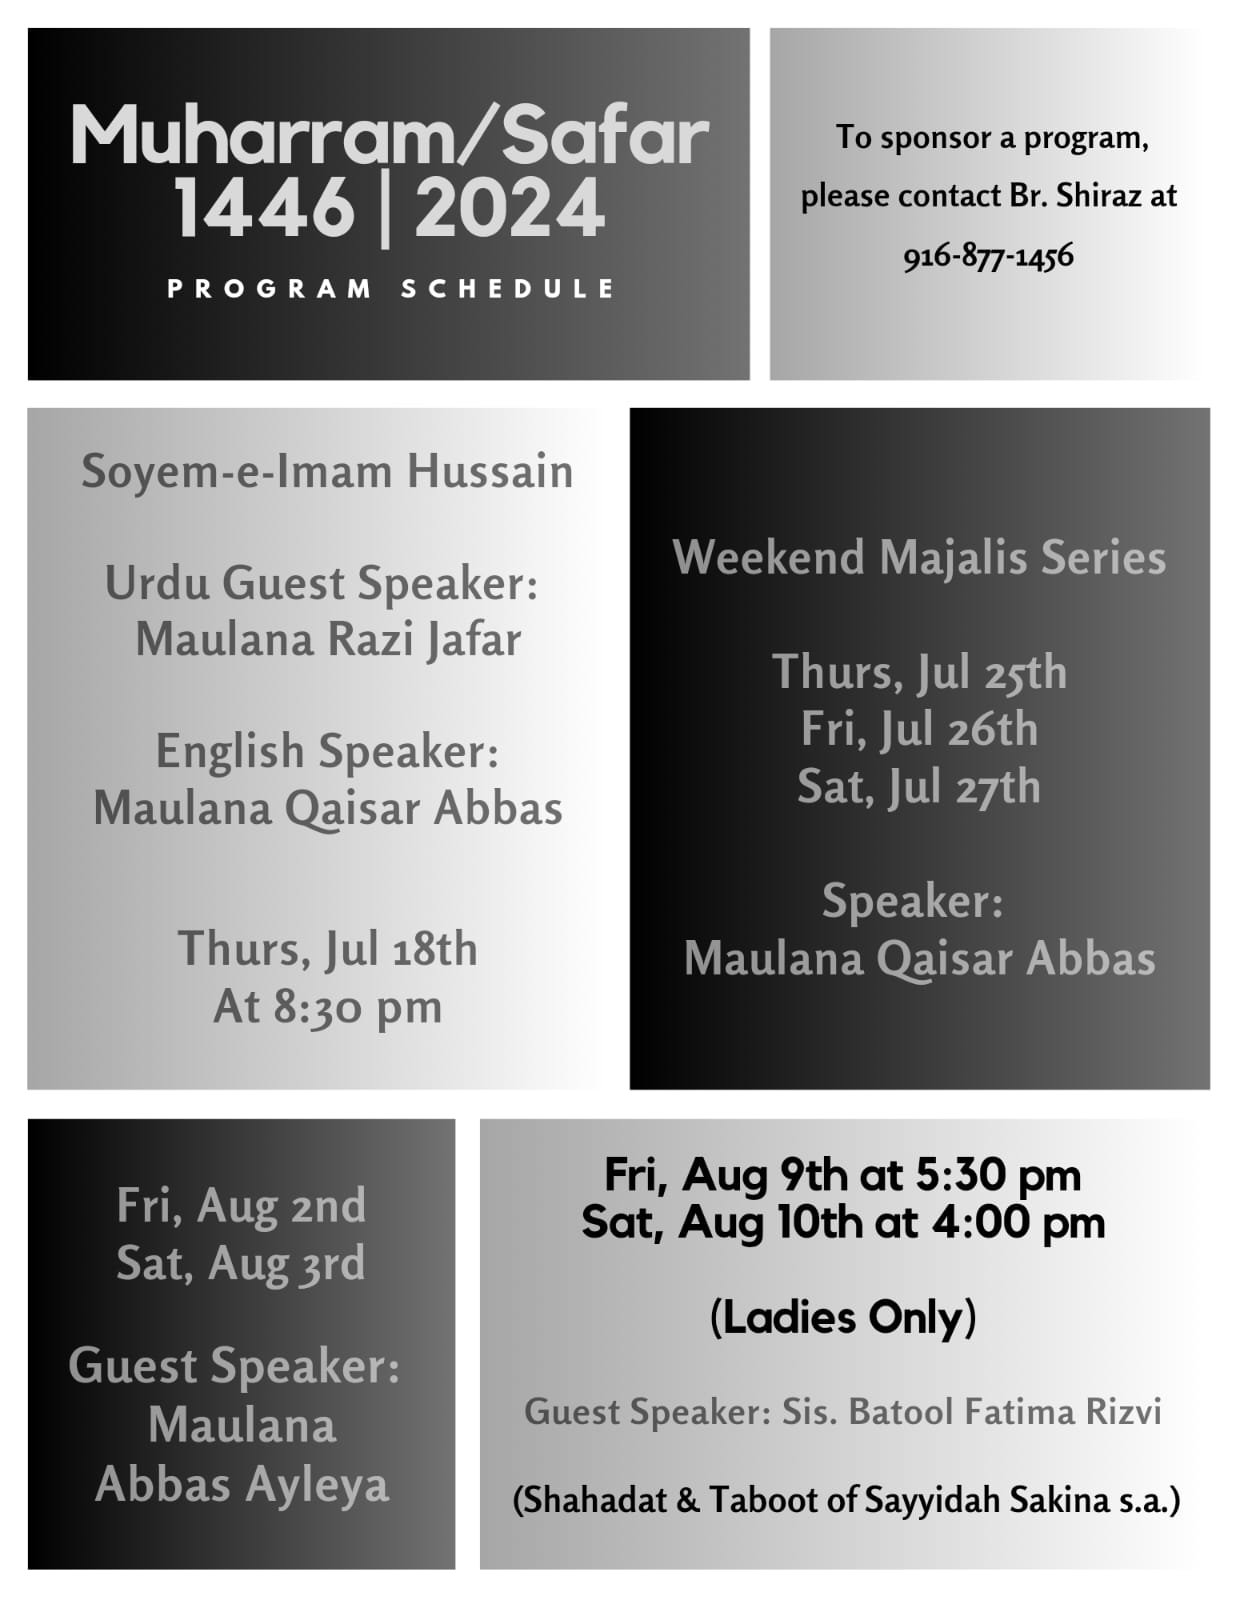 Muharram/Safar 1446 | 2024 Program schedule